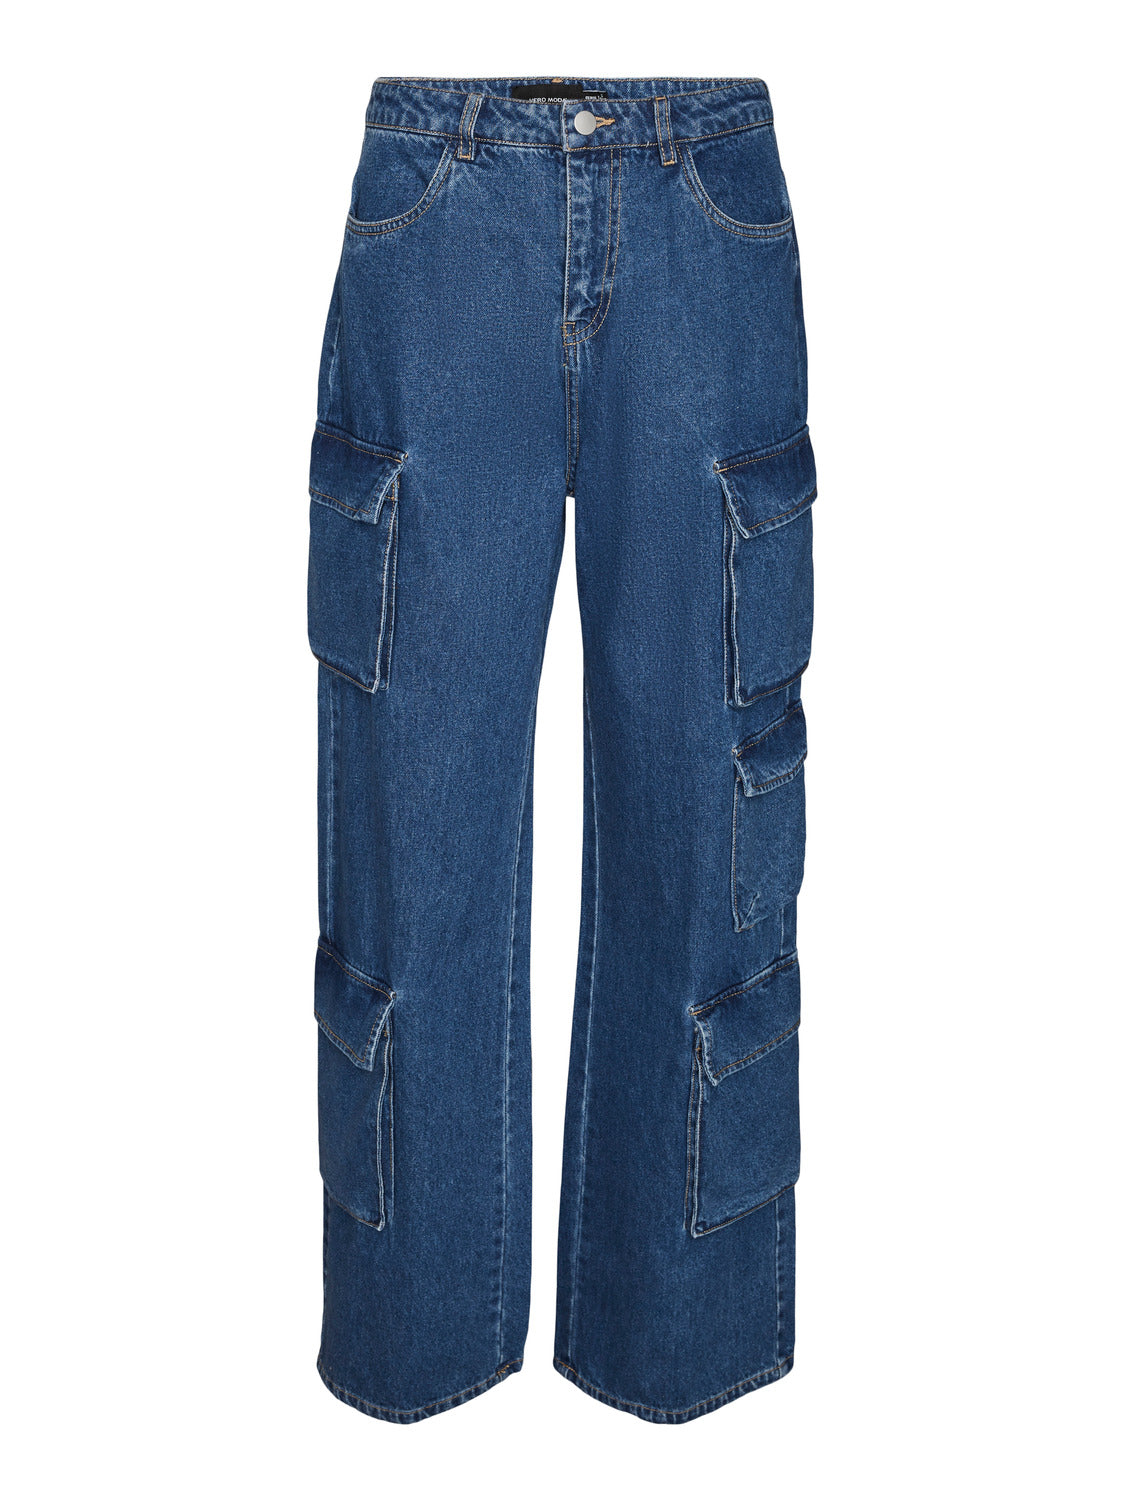 VMALEXA Jeans - Medium Blue Denim